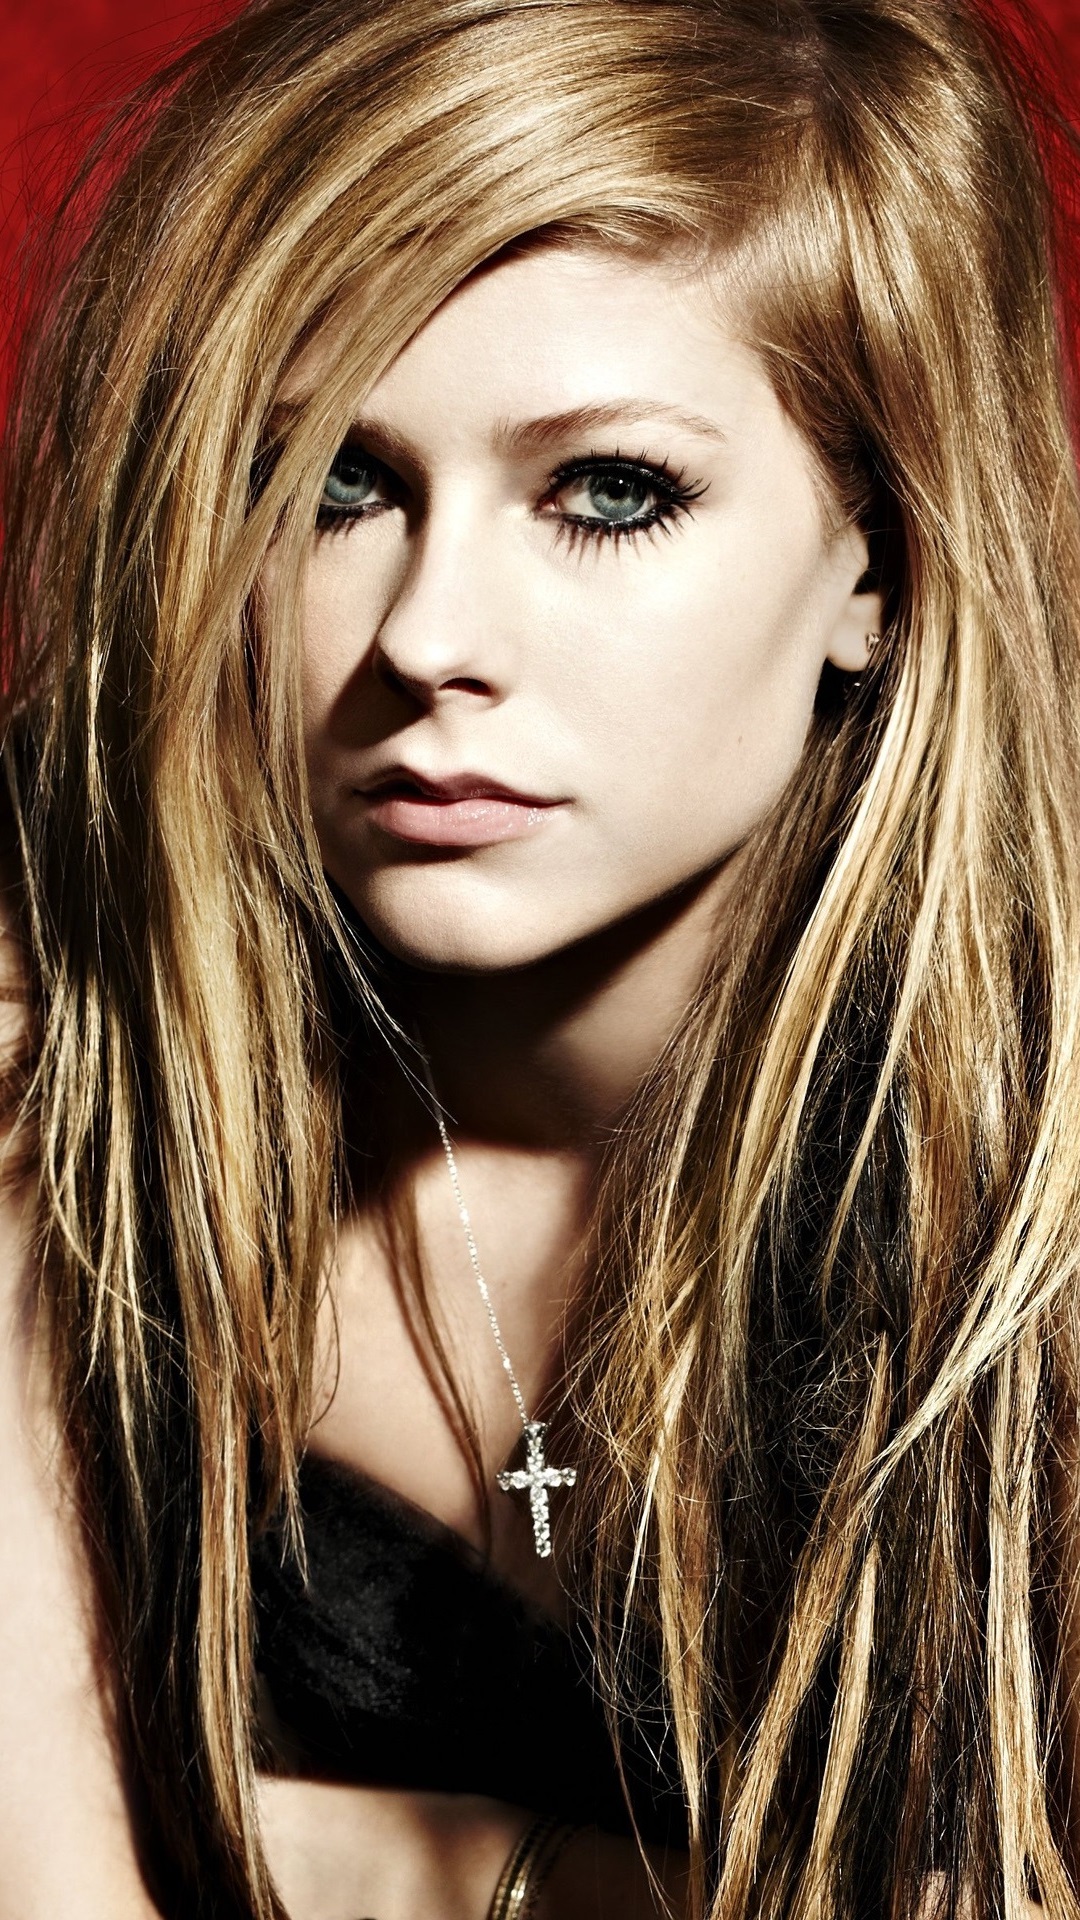 Iphone Wallpaper Avril Lavigne Avril Lavigne X Wallpaper Teahub Io